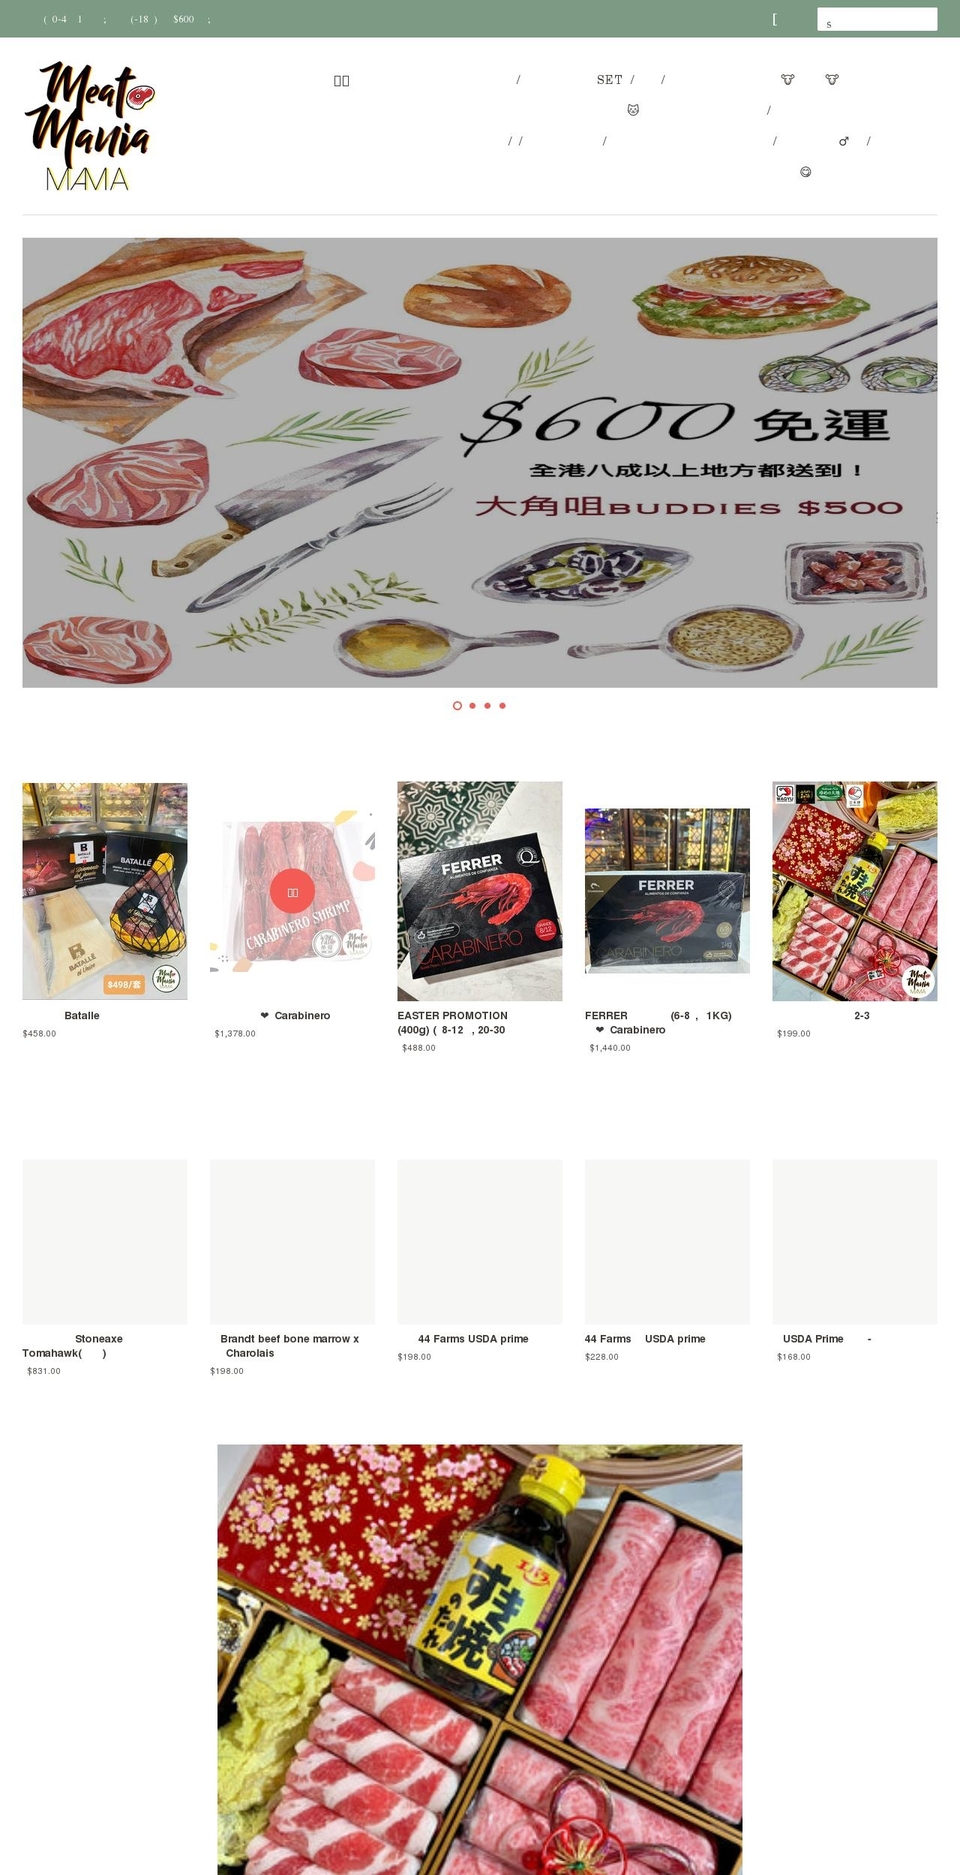 meatmania.hk shopify website screenshot